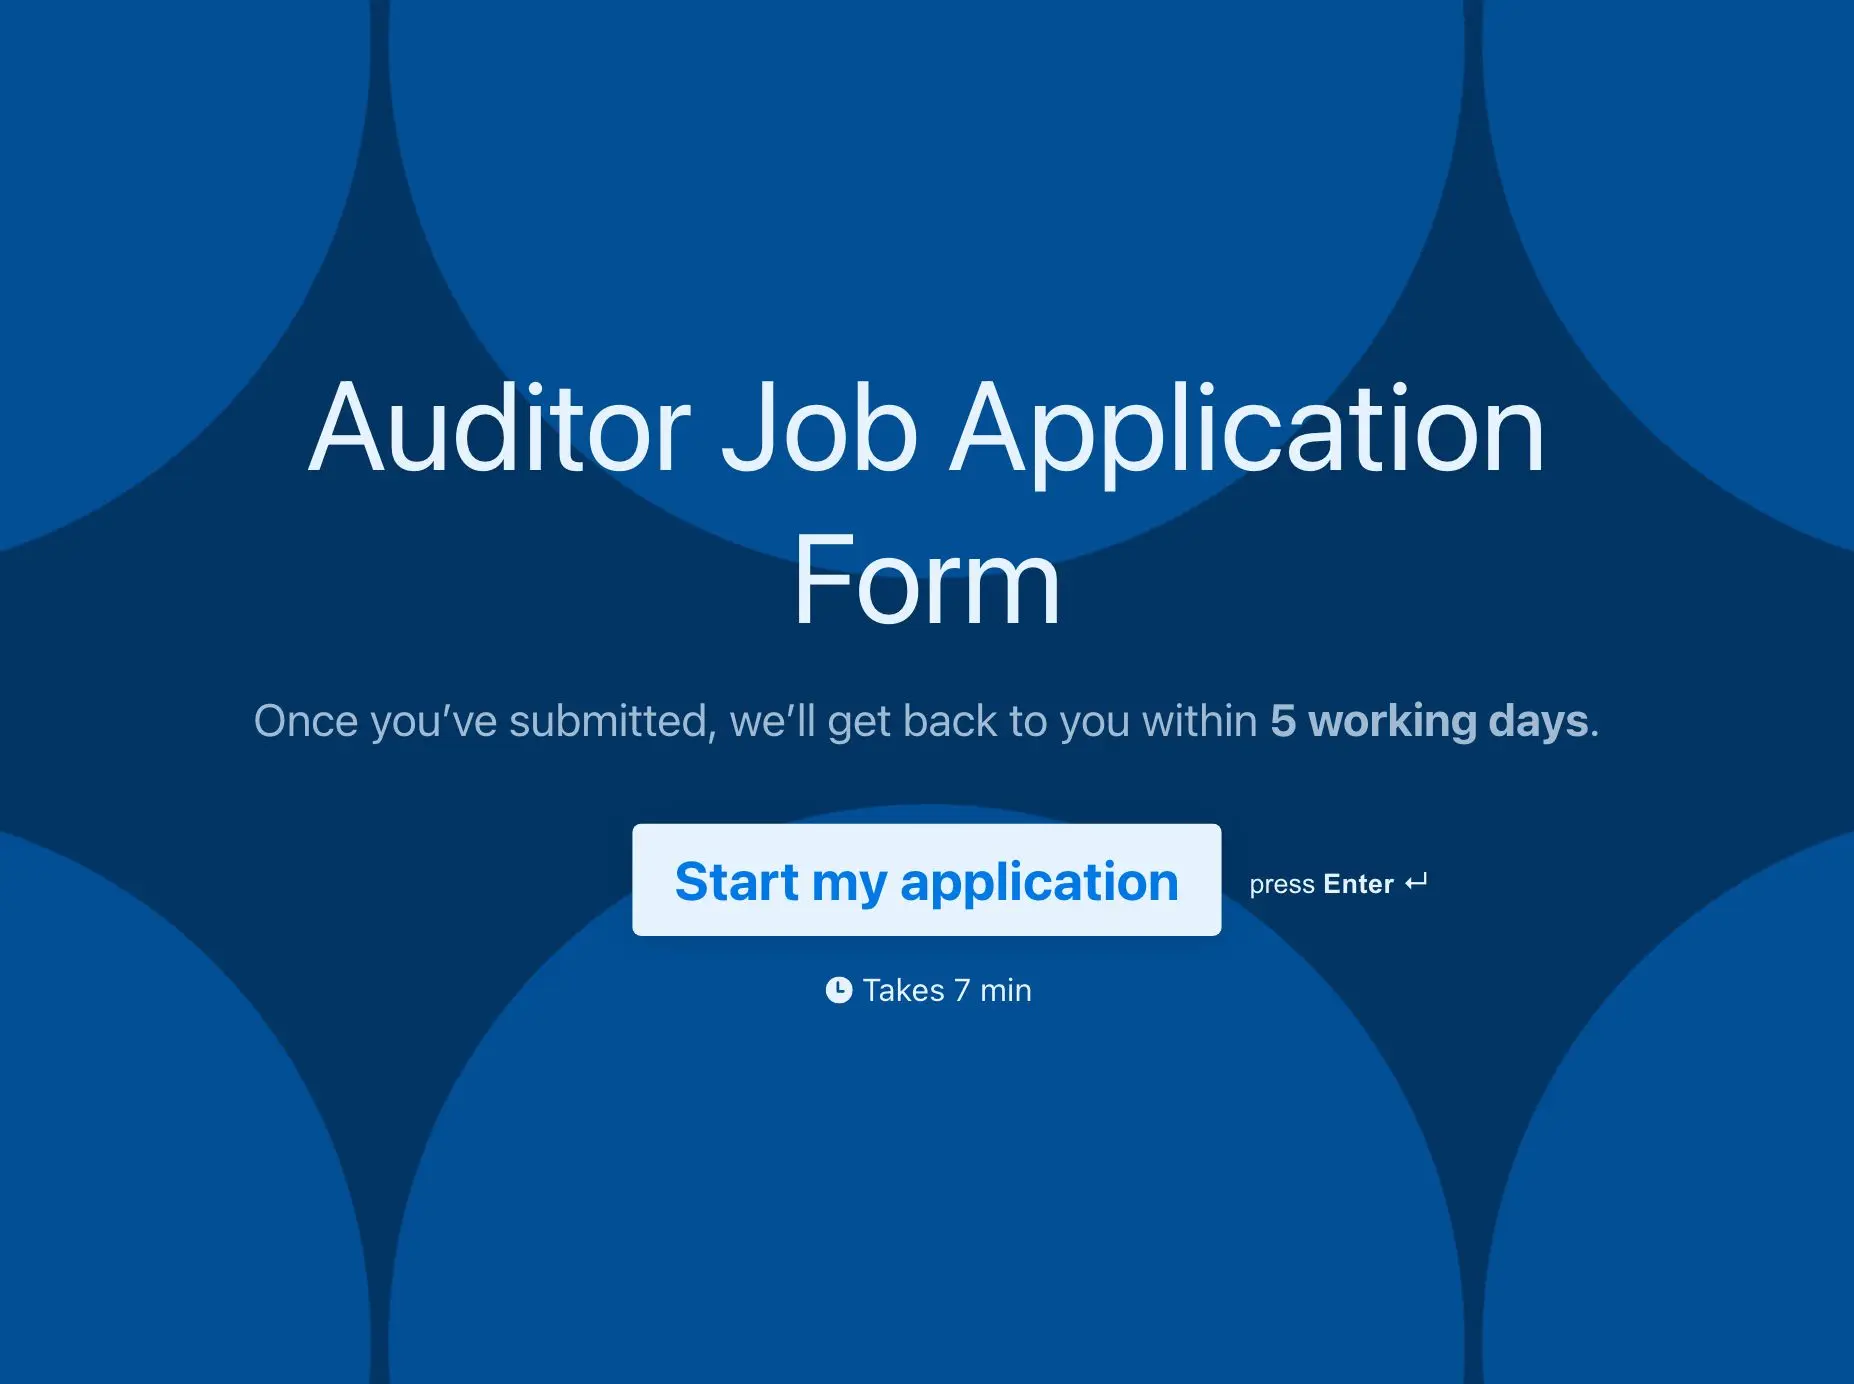 Auditor Job Application Form Template Hero